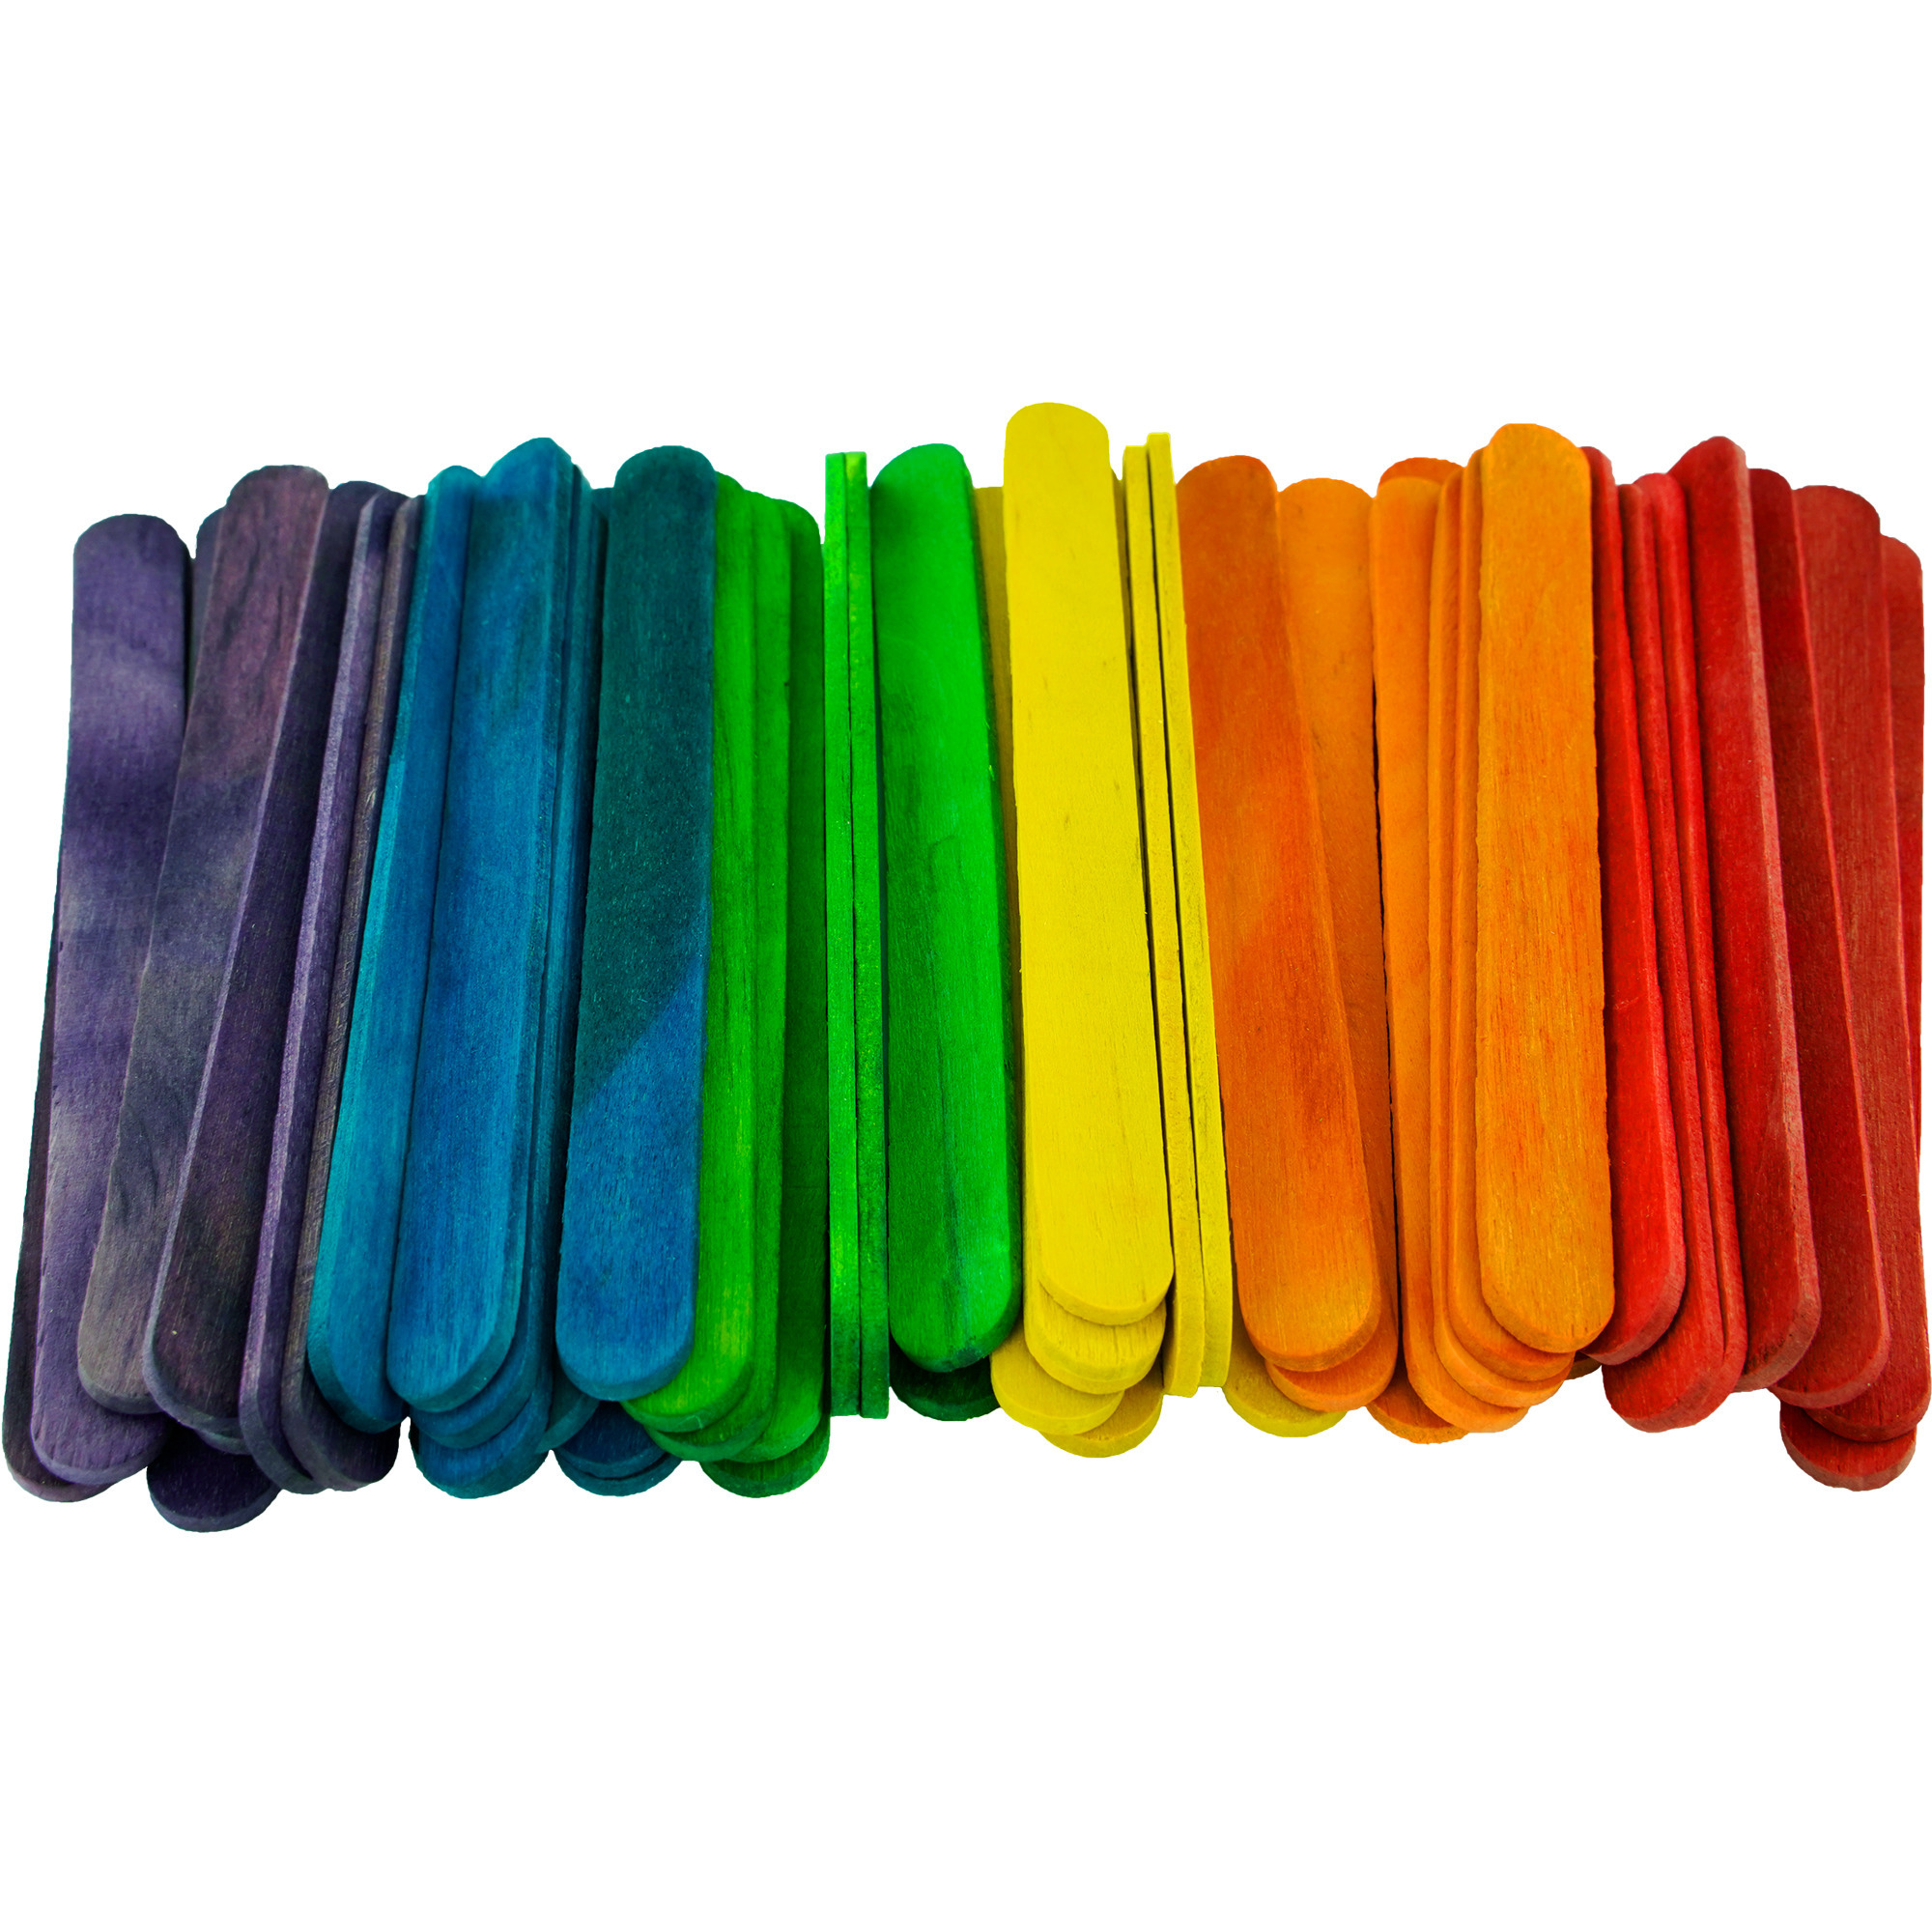 50x stuks muti-color kleur hobby knutselen houtjes/ijslollie stokjes 114 x 10 mm